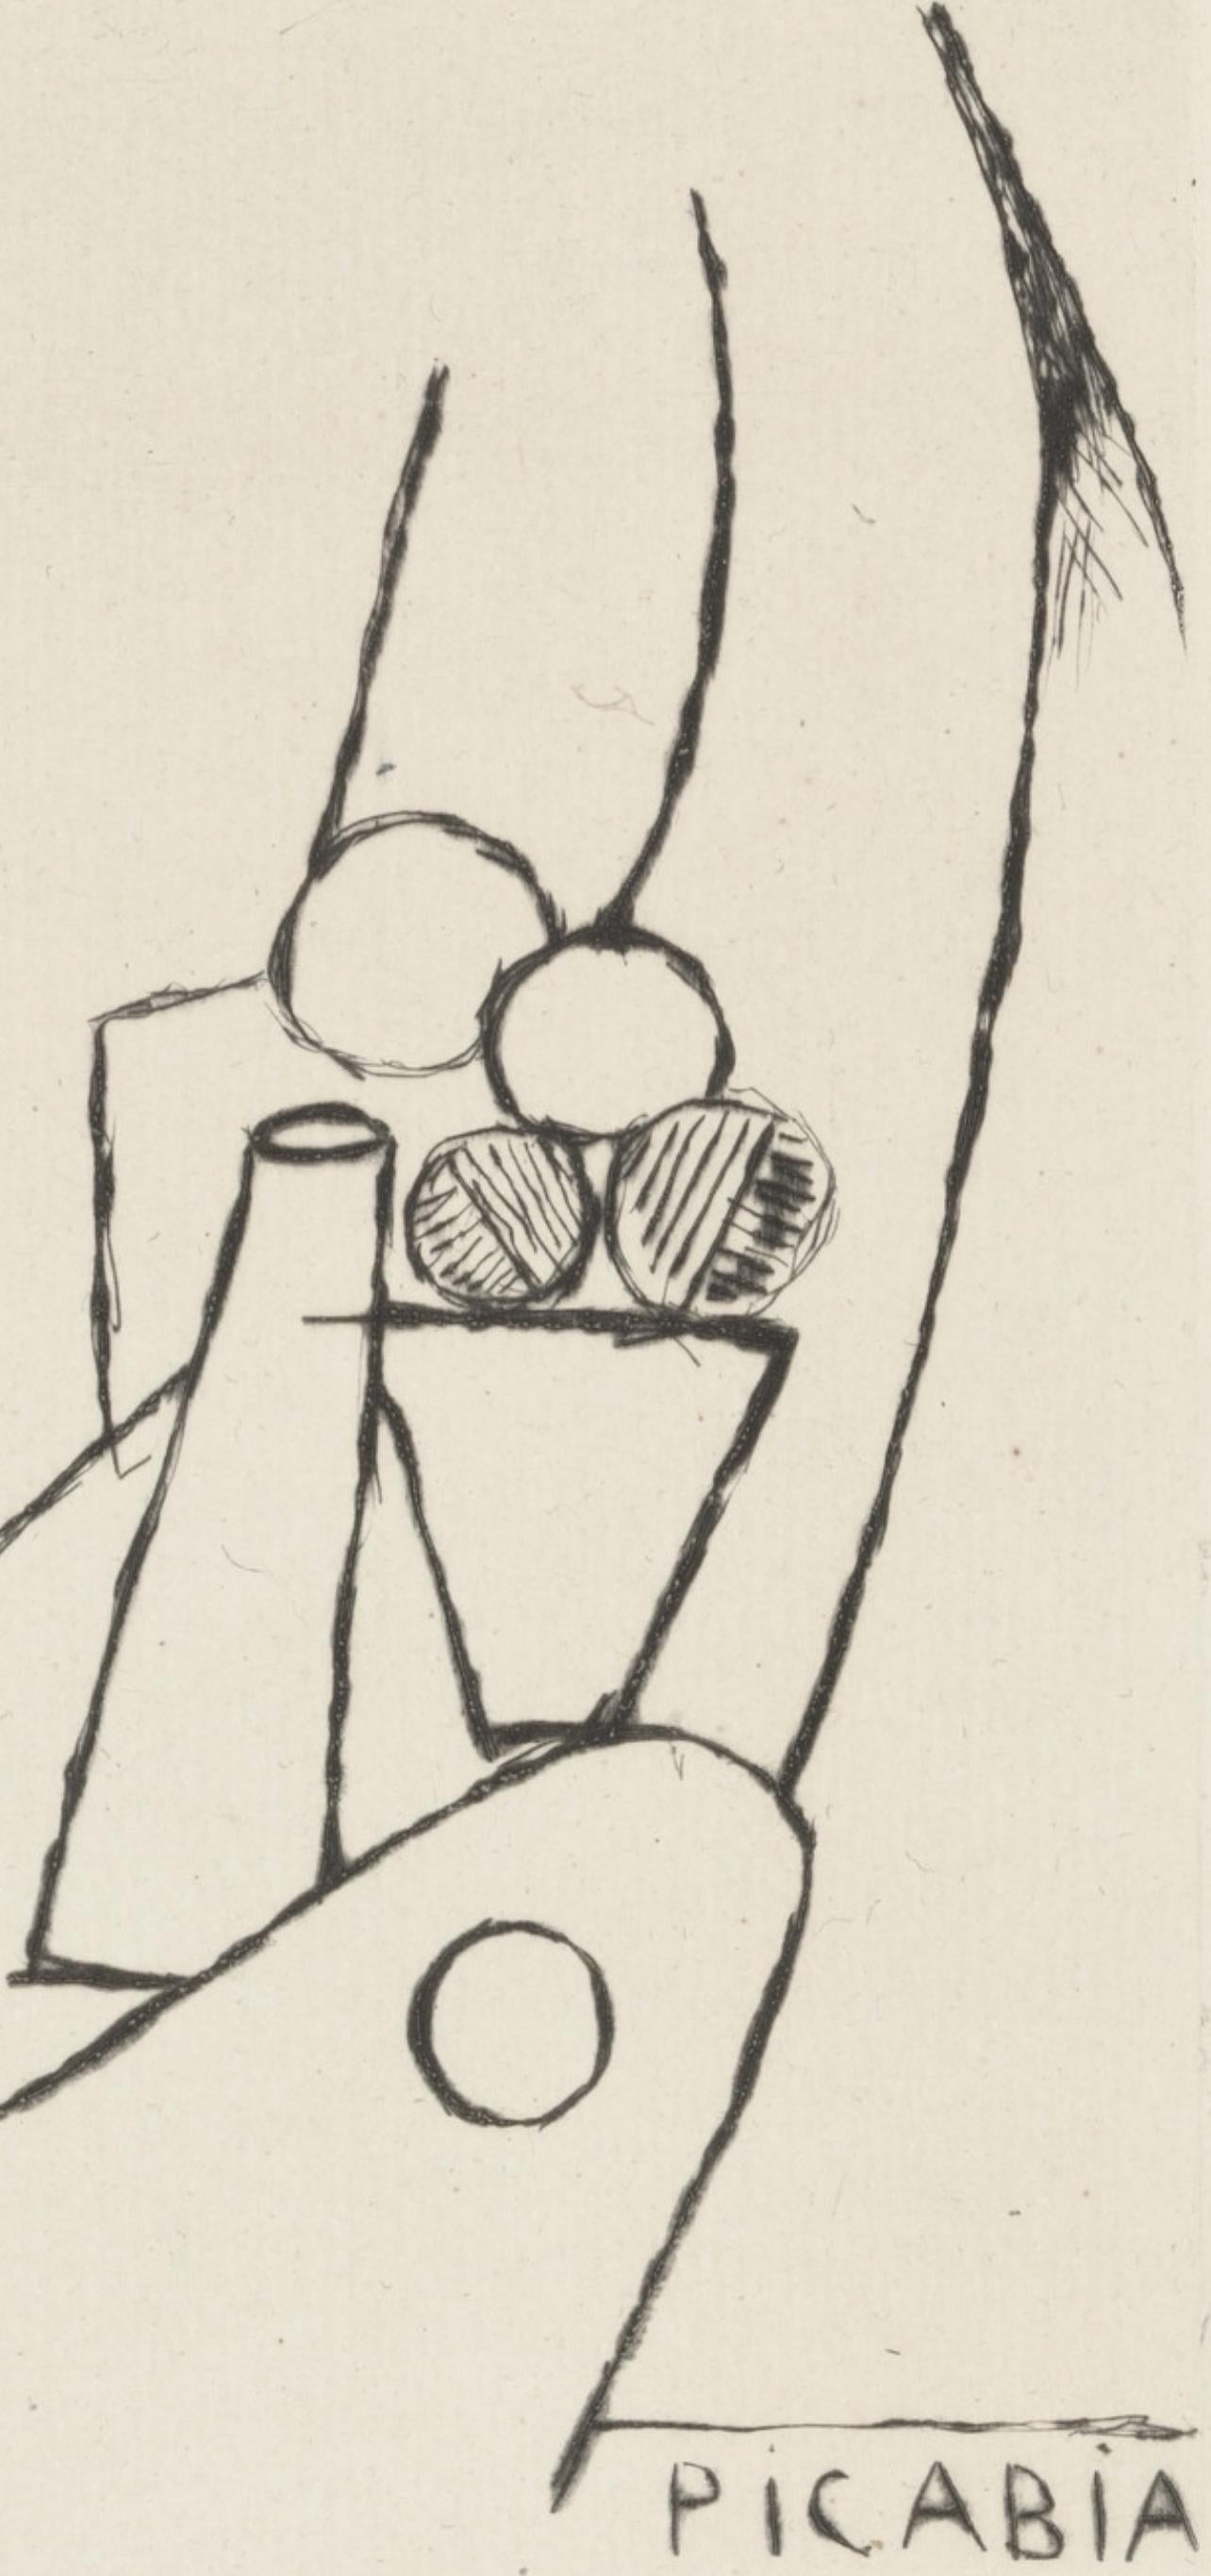 Picabia, Composition, Du cubisme (after) - Print by Francis Picabia